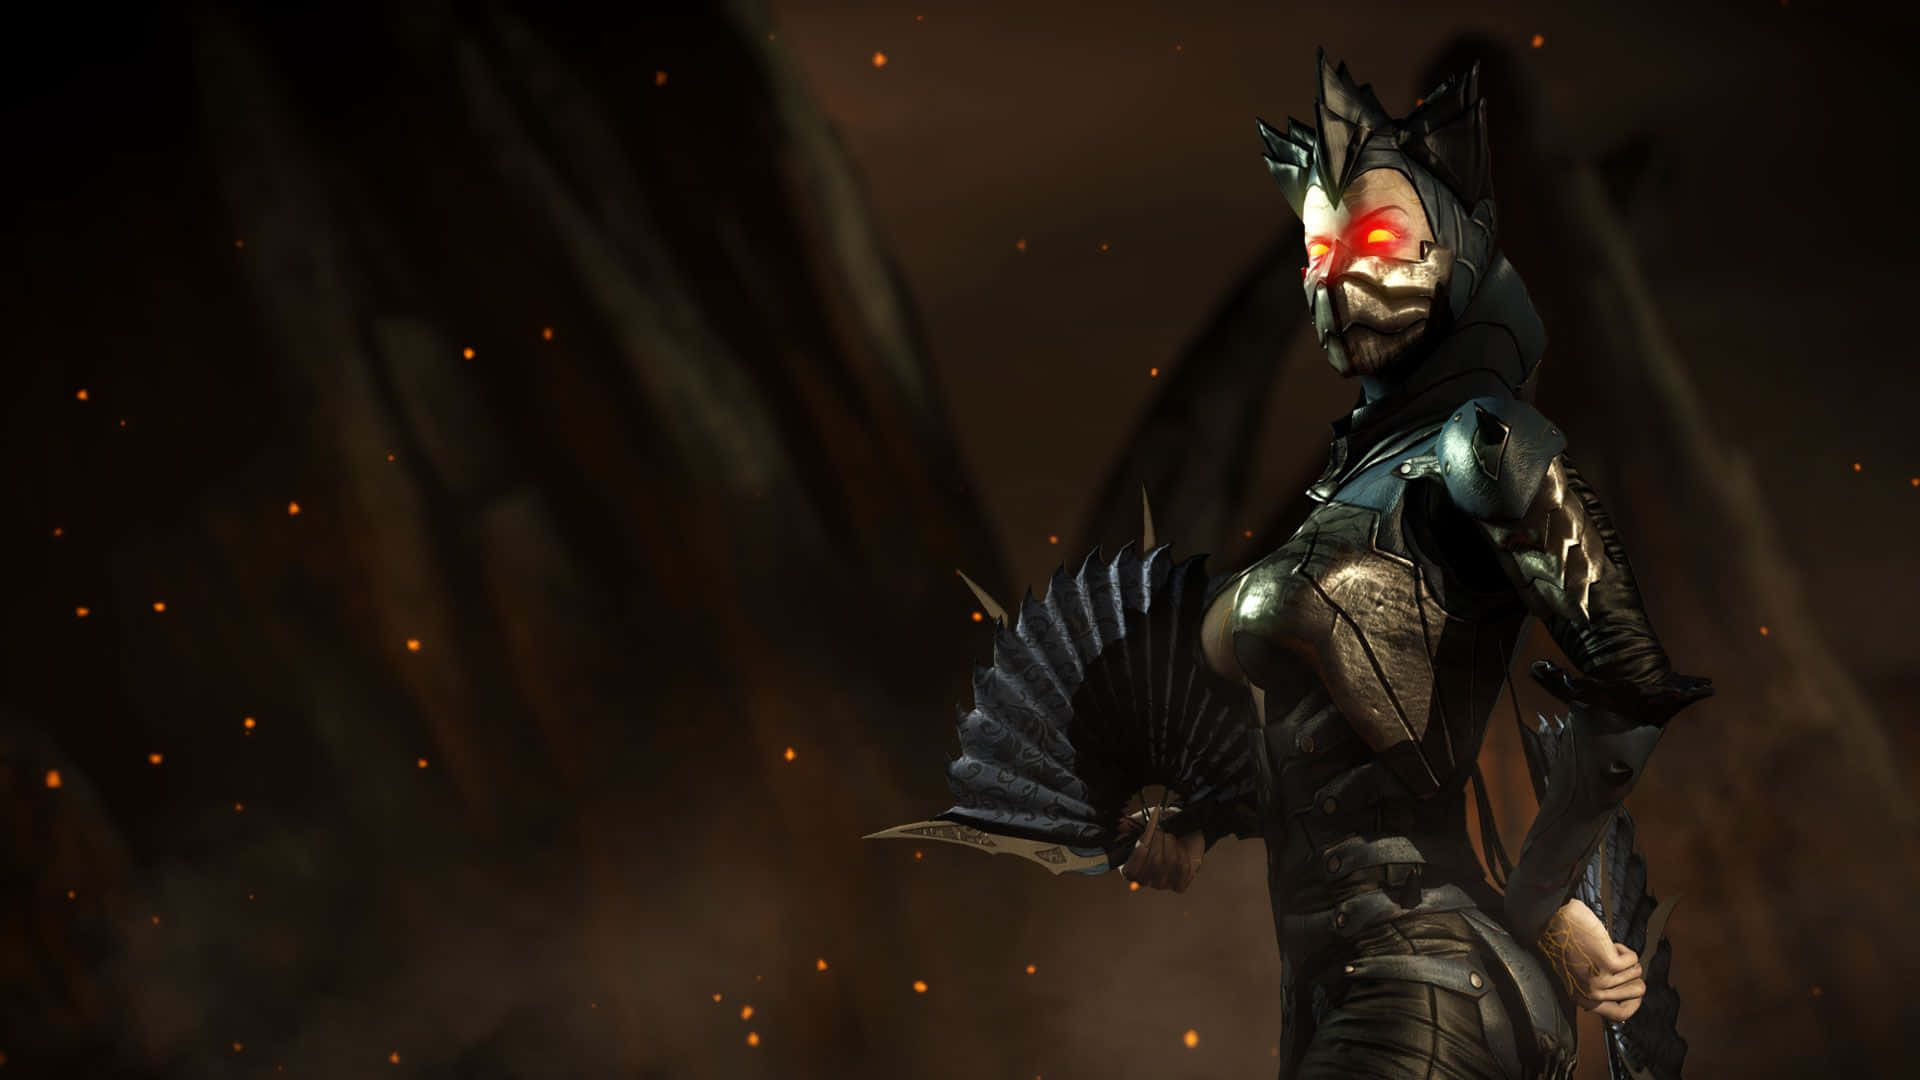 Kitana, the fierce warrior princess from Mortal Kombat Wallpaper